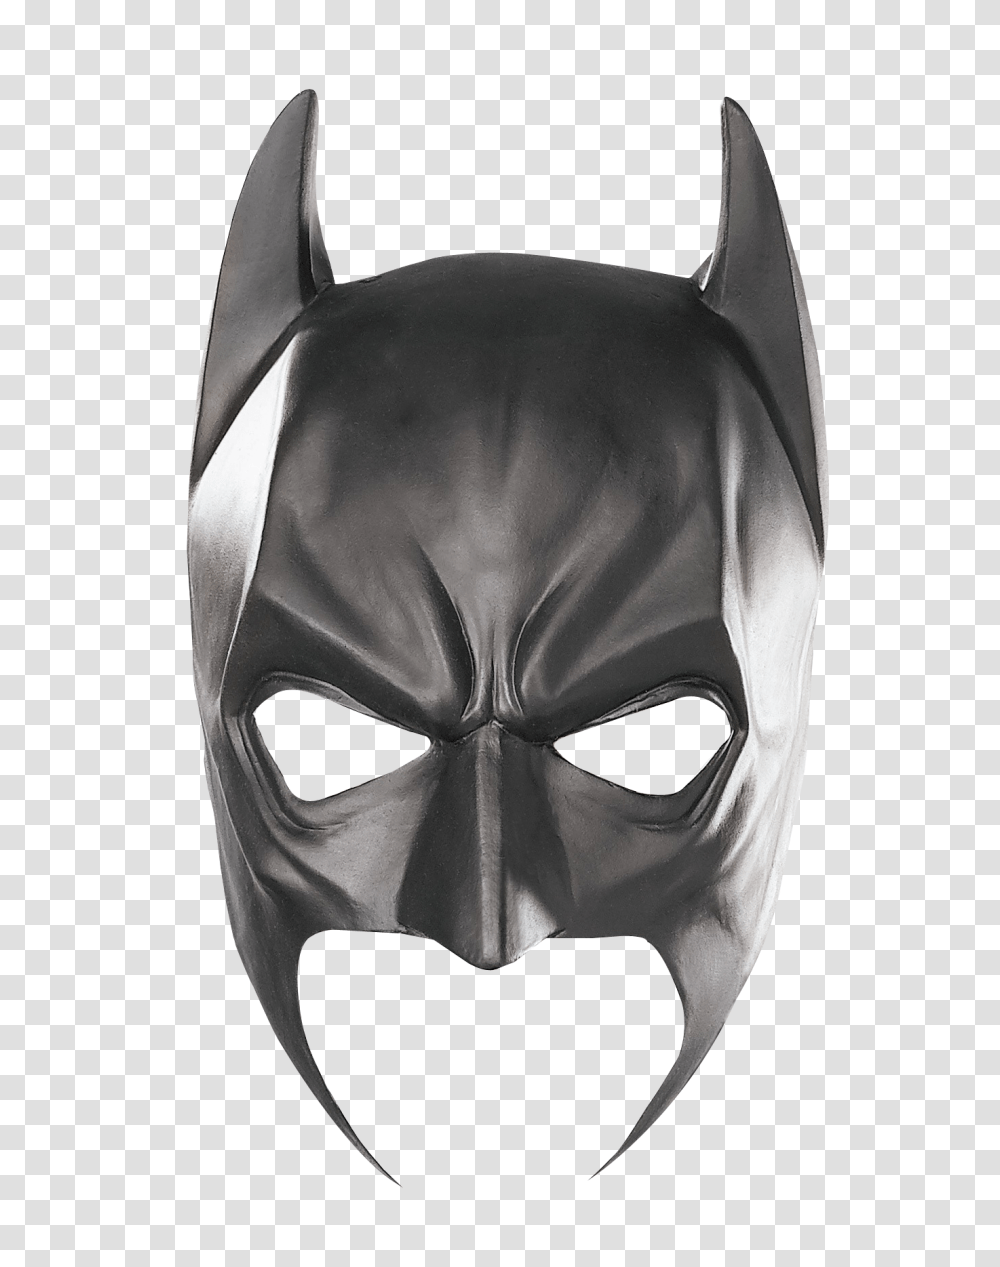 Batman Mask Image Transparent Png